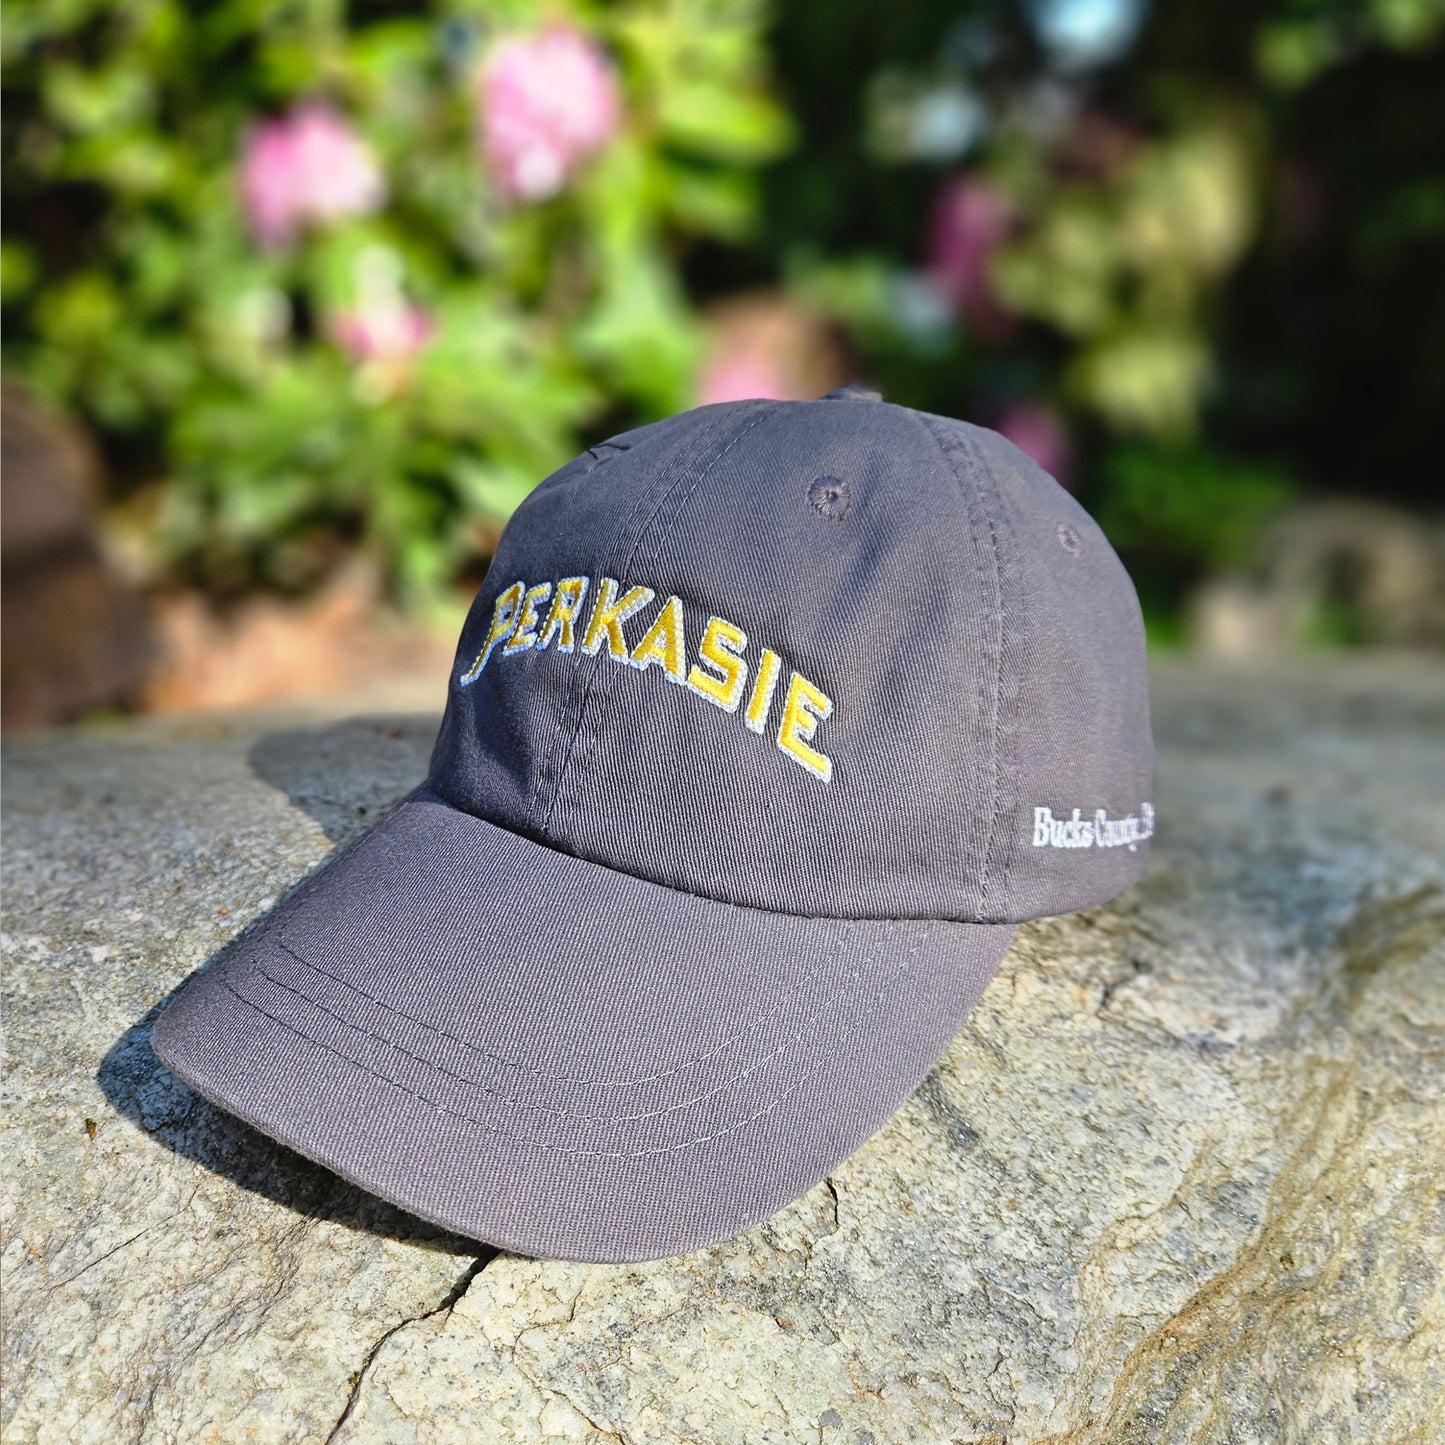 Perkasie - Bucks County Needlepoint Hats